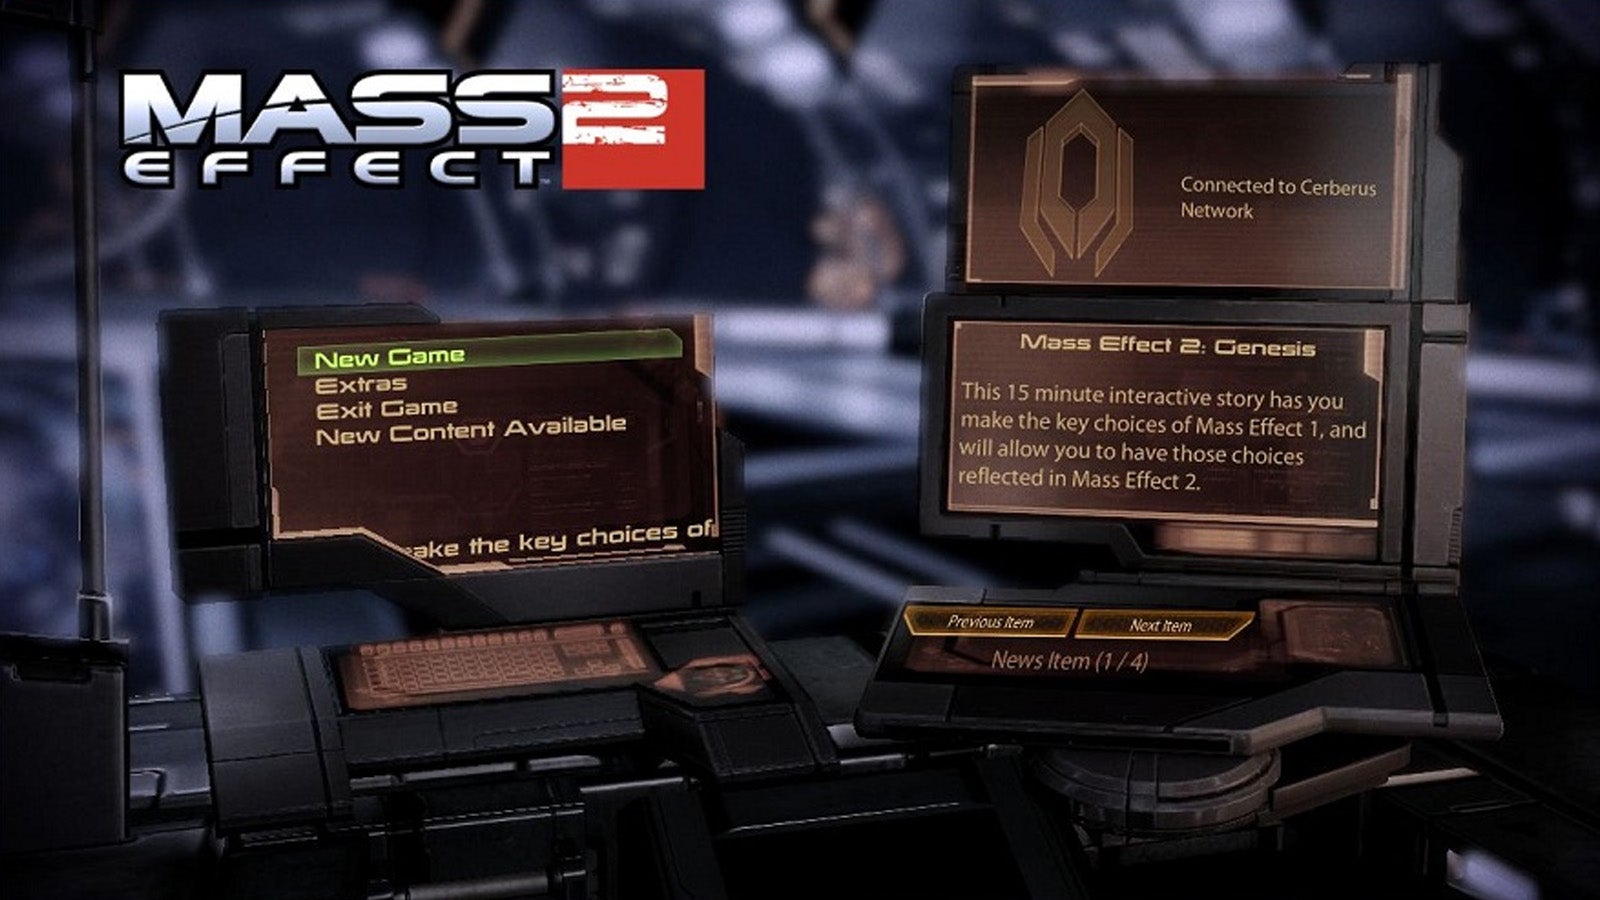 Mod Mass Effect Legendary Edition mengembalikan Cerberus Daily News yang hilang